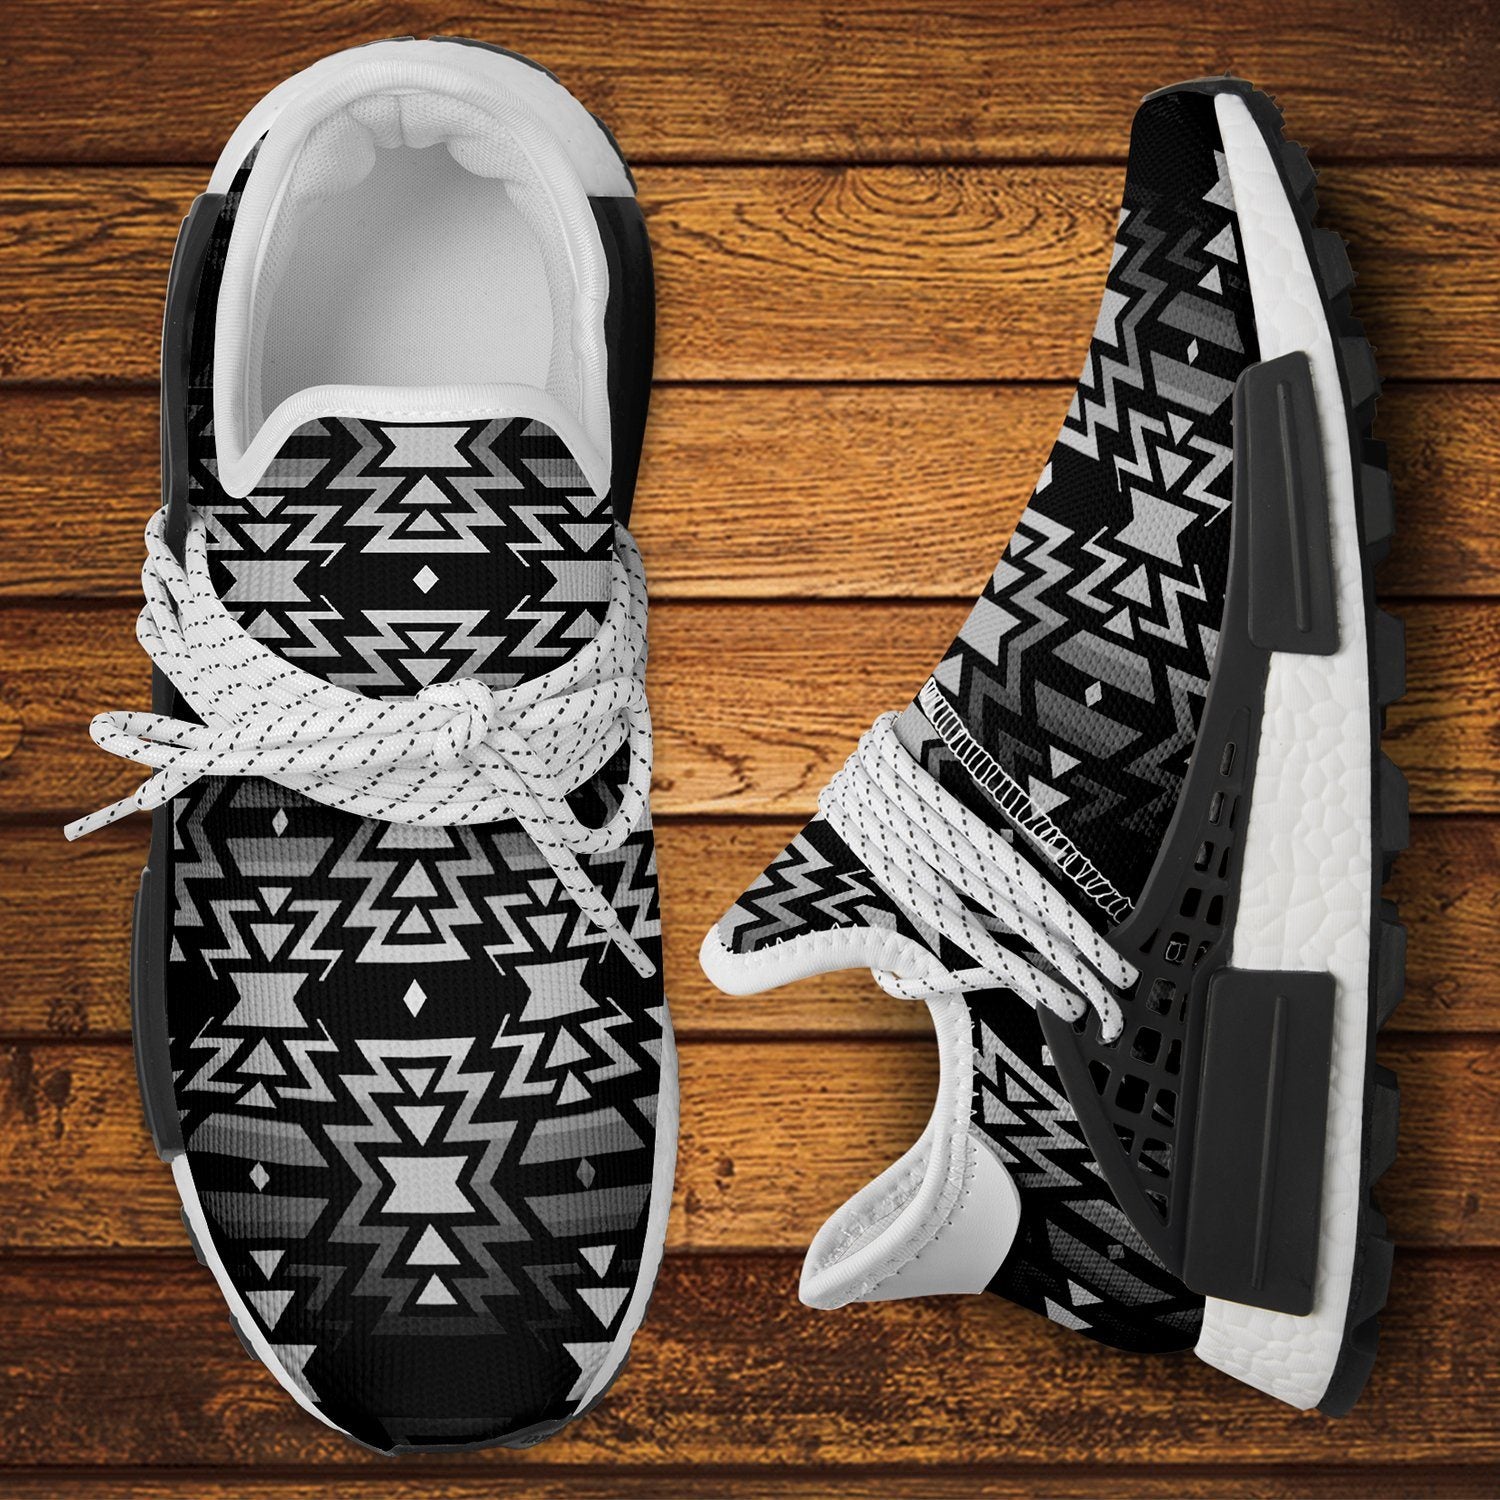 Black Fire Black and White Okaki Sneakers Shoes 49 Dzine 